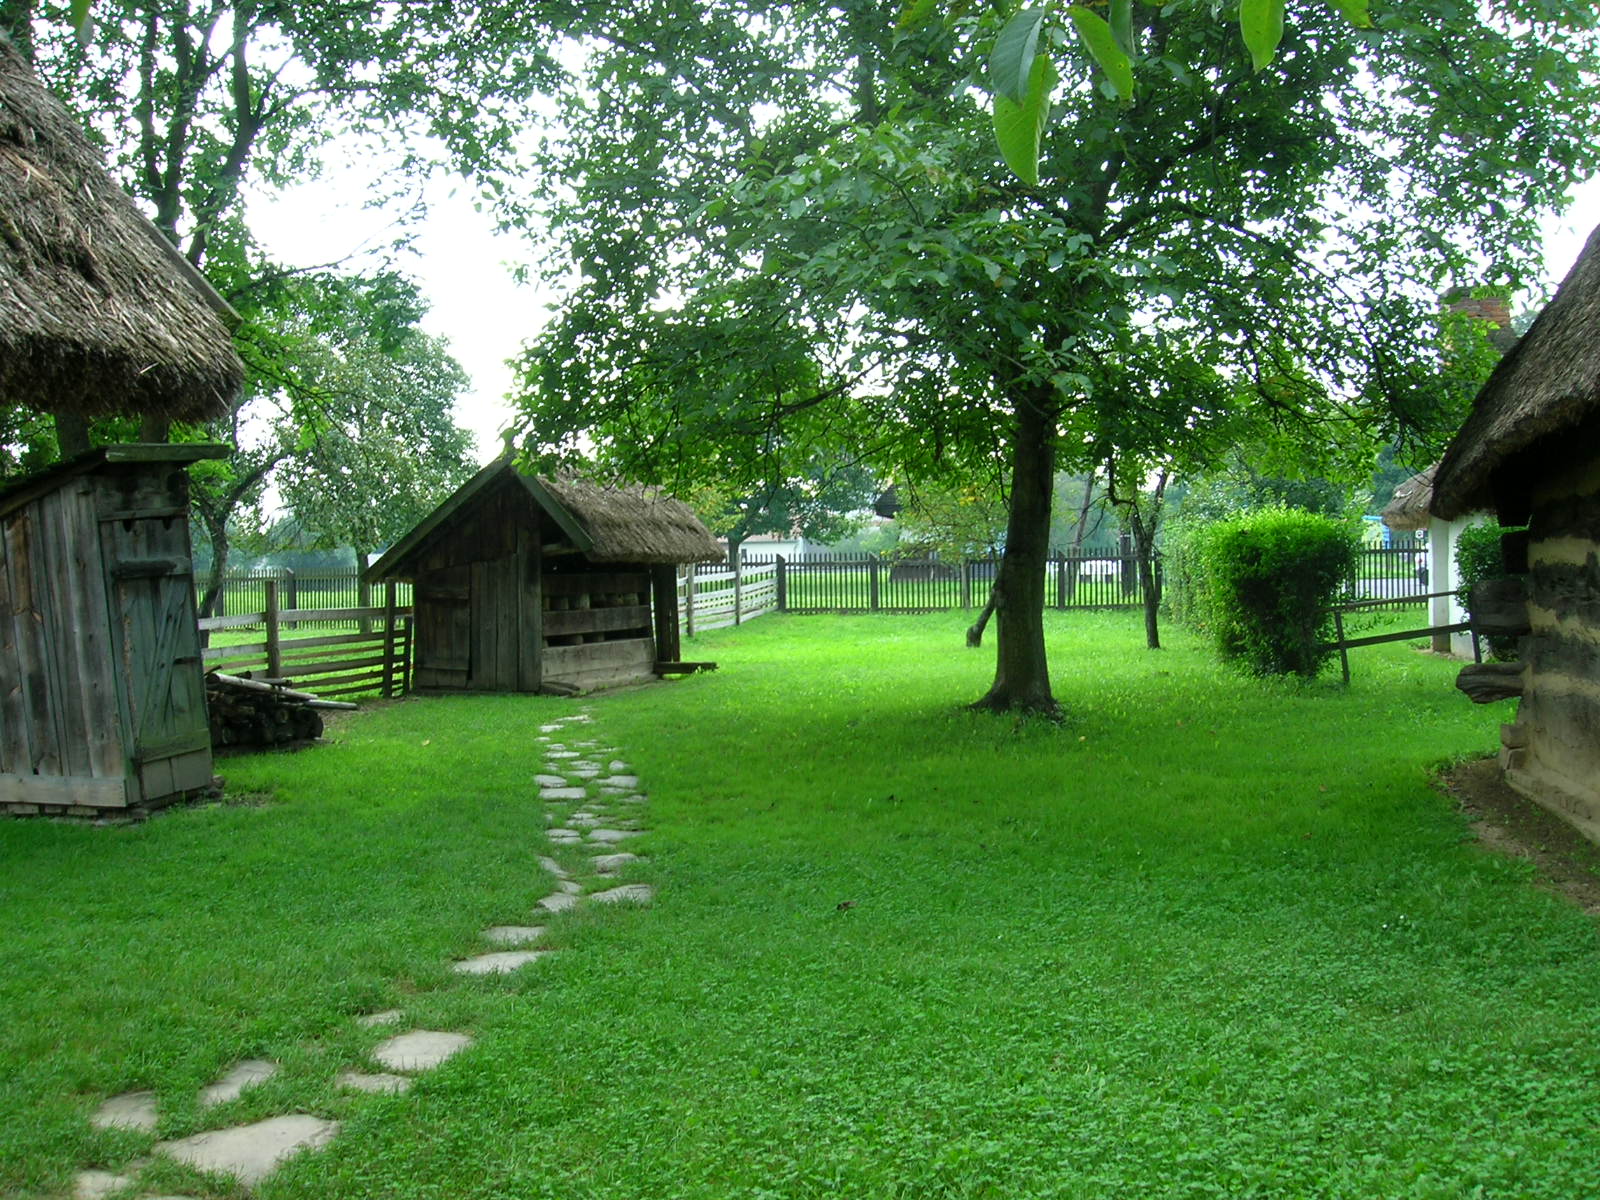 File:Gocsej village house backyard.jpg - Wikimedia Commons